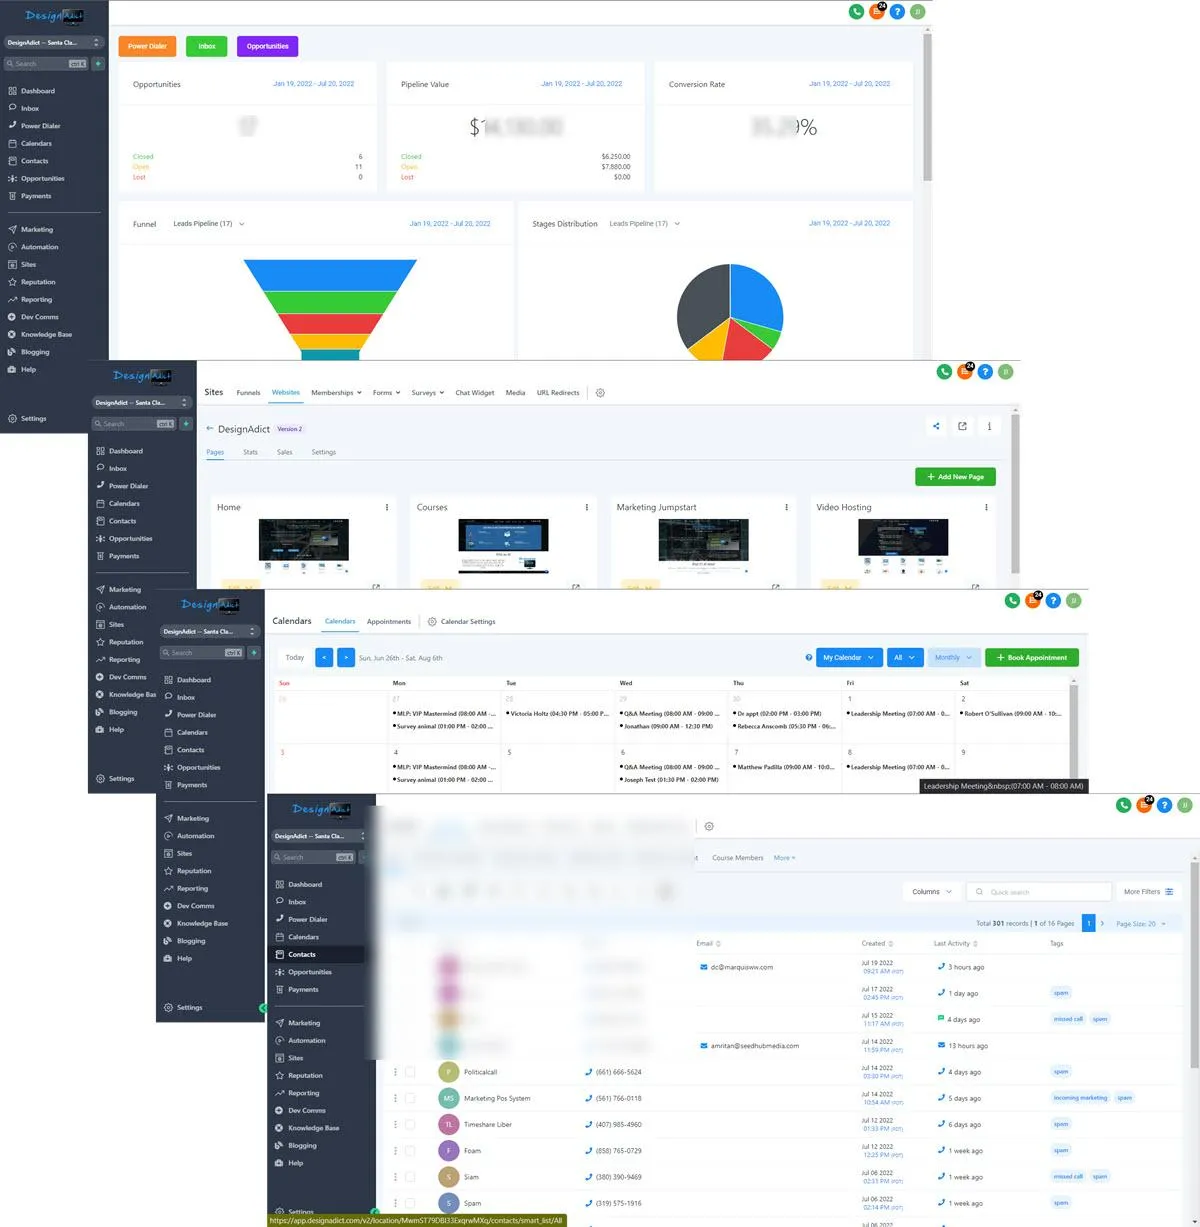 Business in a Box Screenshots - Dashboard - Websites - Calendaring - Contact Manager